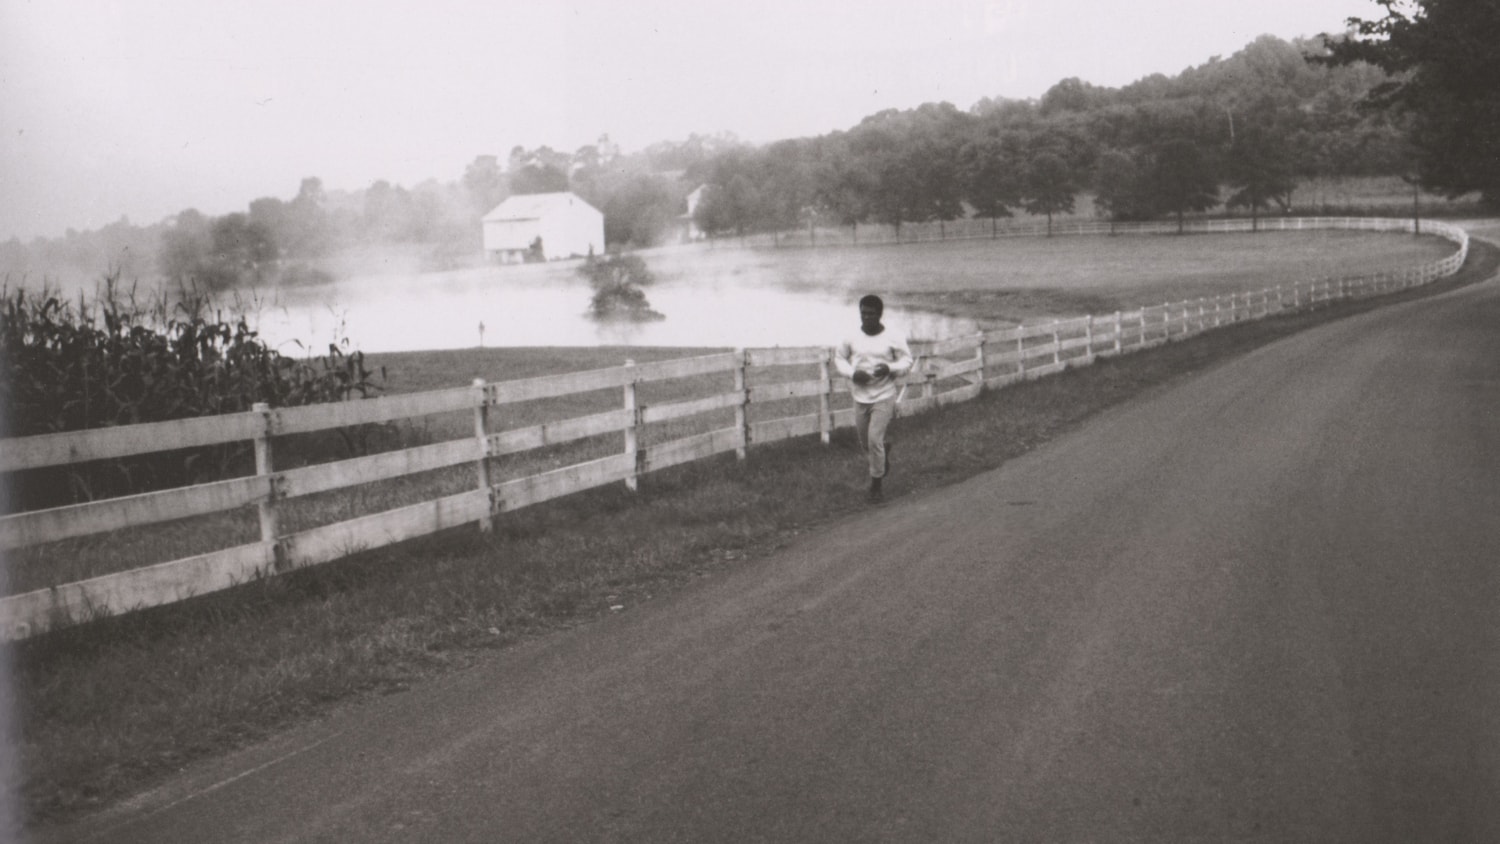 A man runs beside a fence on a long road